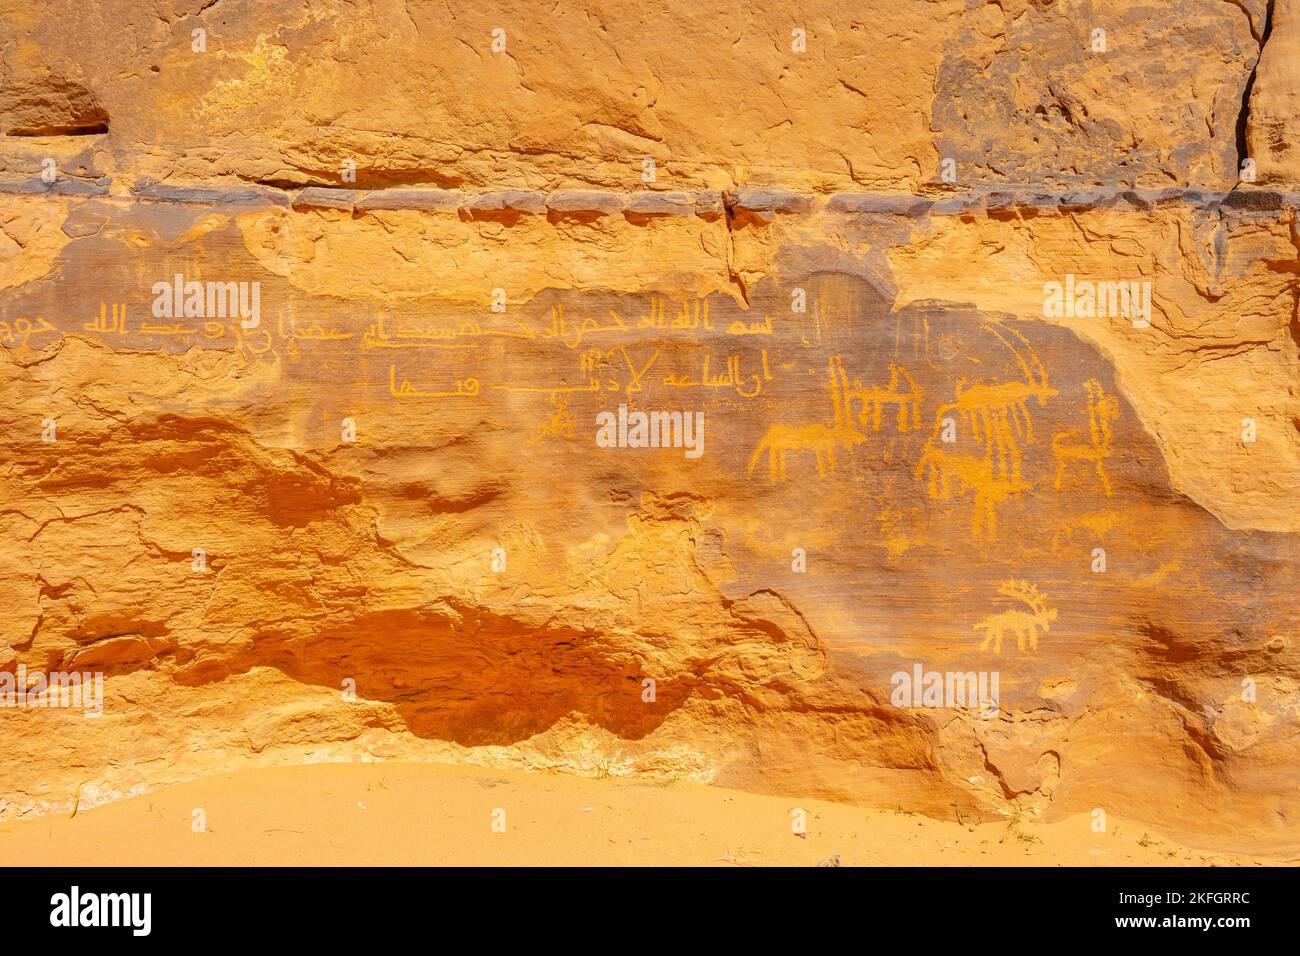 Ancient rock art on cliff face in Wadi Rum Jordan Stock Photo